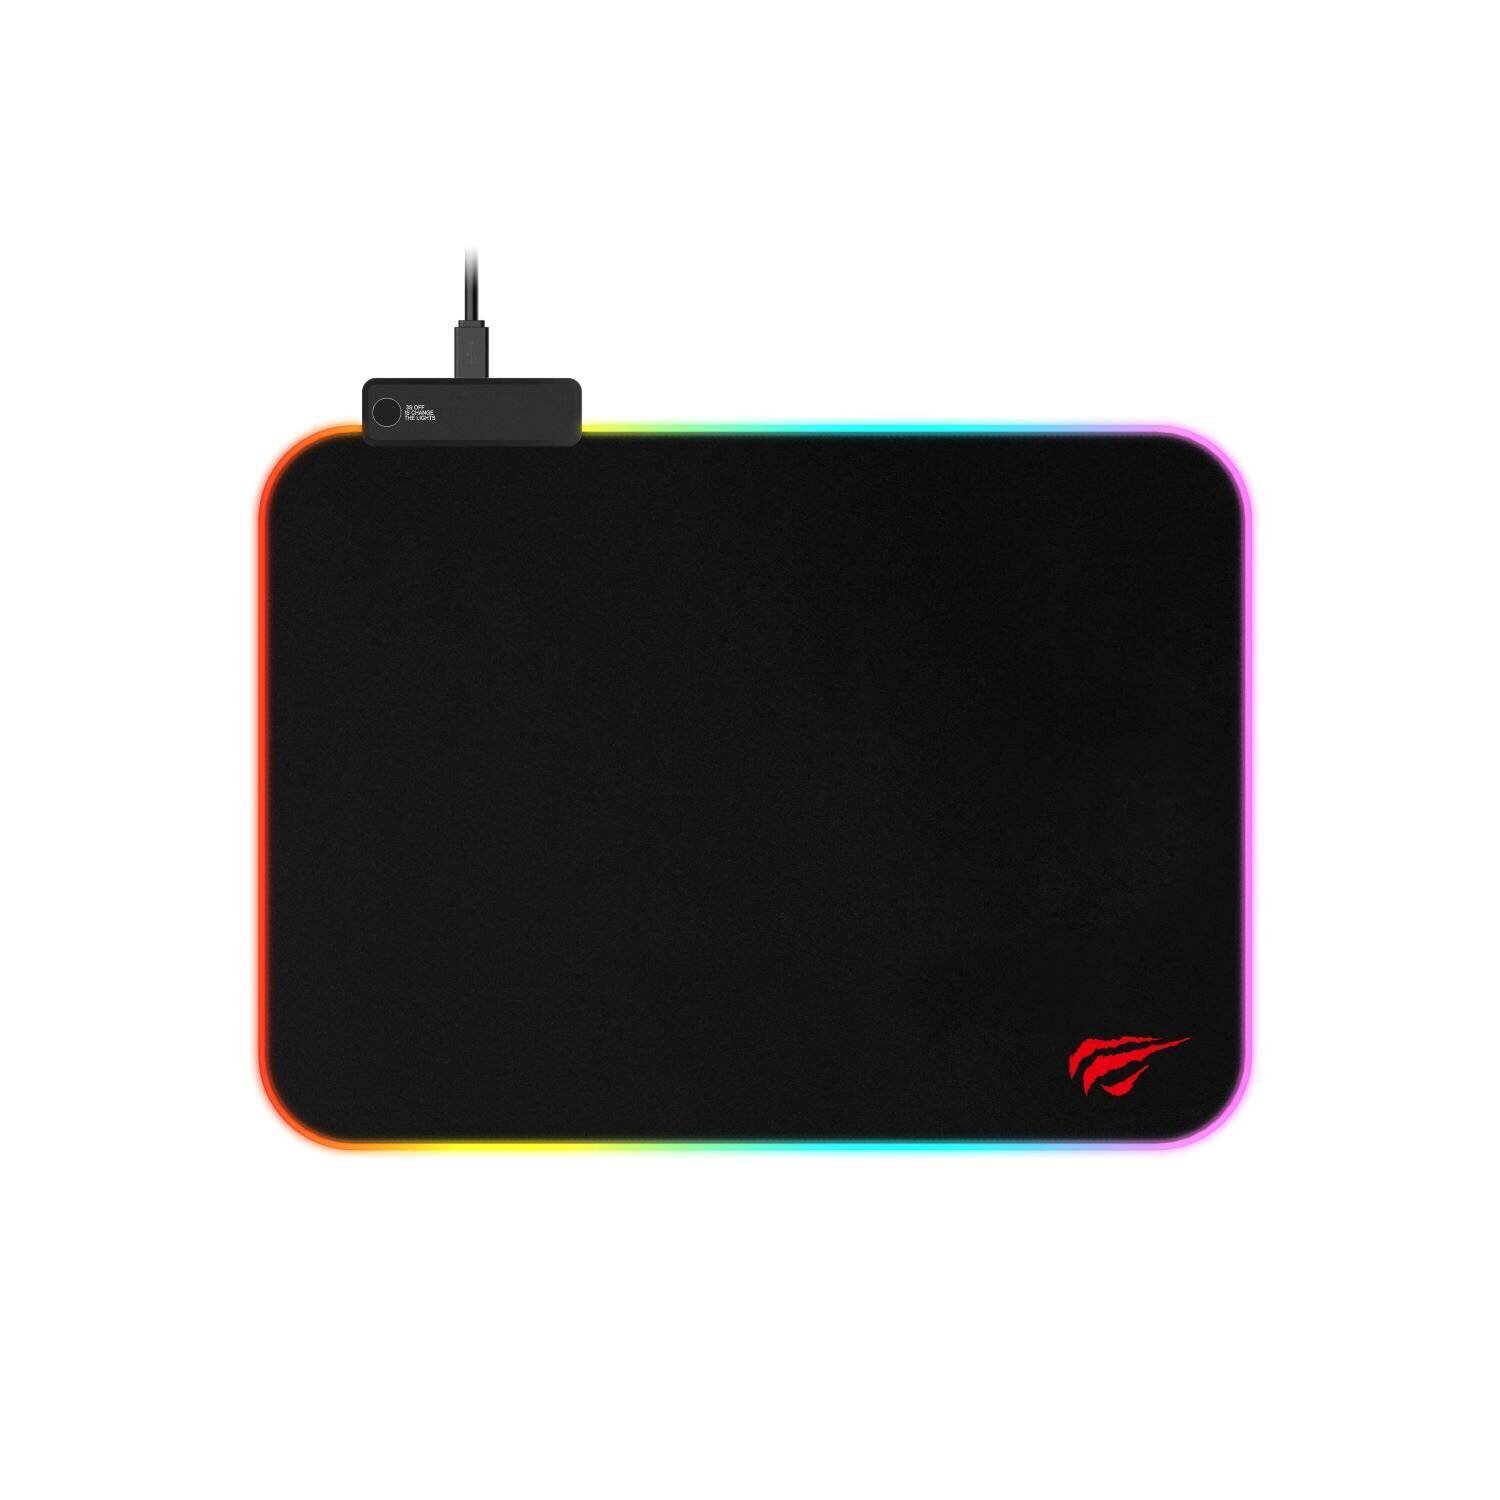 Mouse Pad Gamer RGB GAMENOTE MP901 - Negro